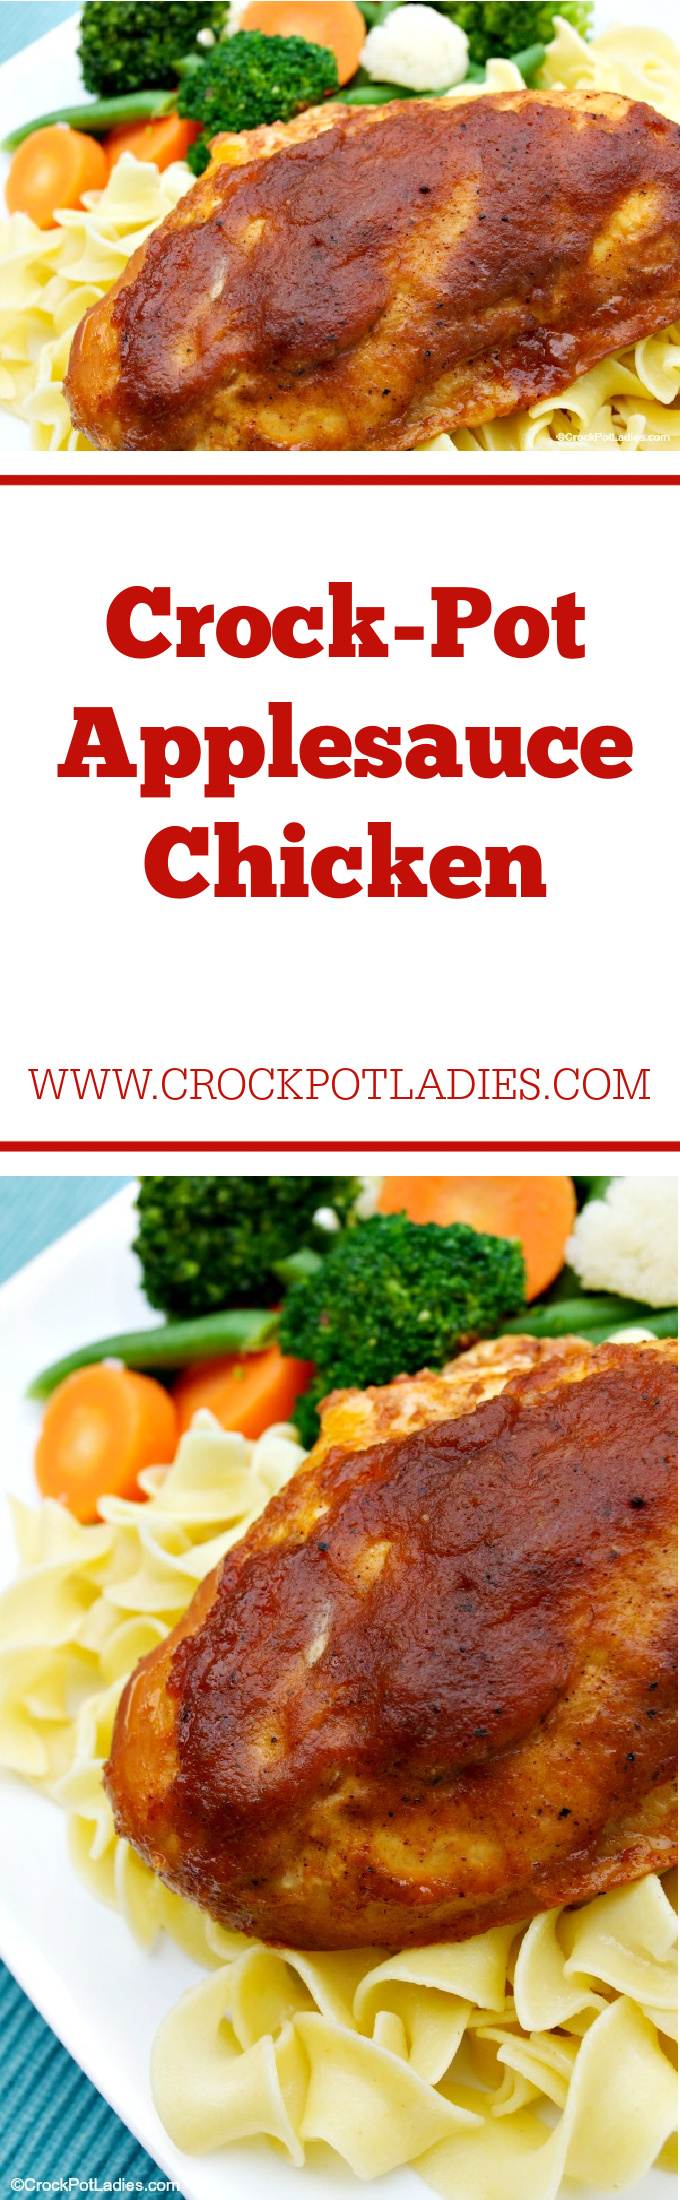 Crock-Pot Applesauce Chicken